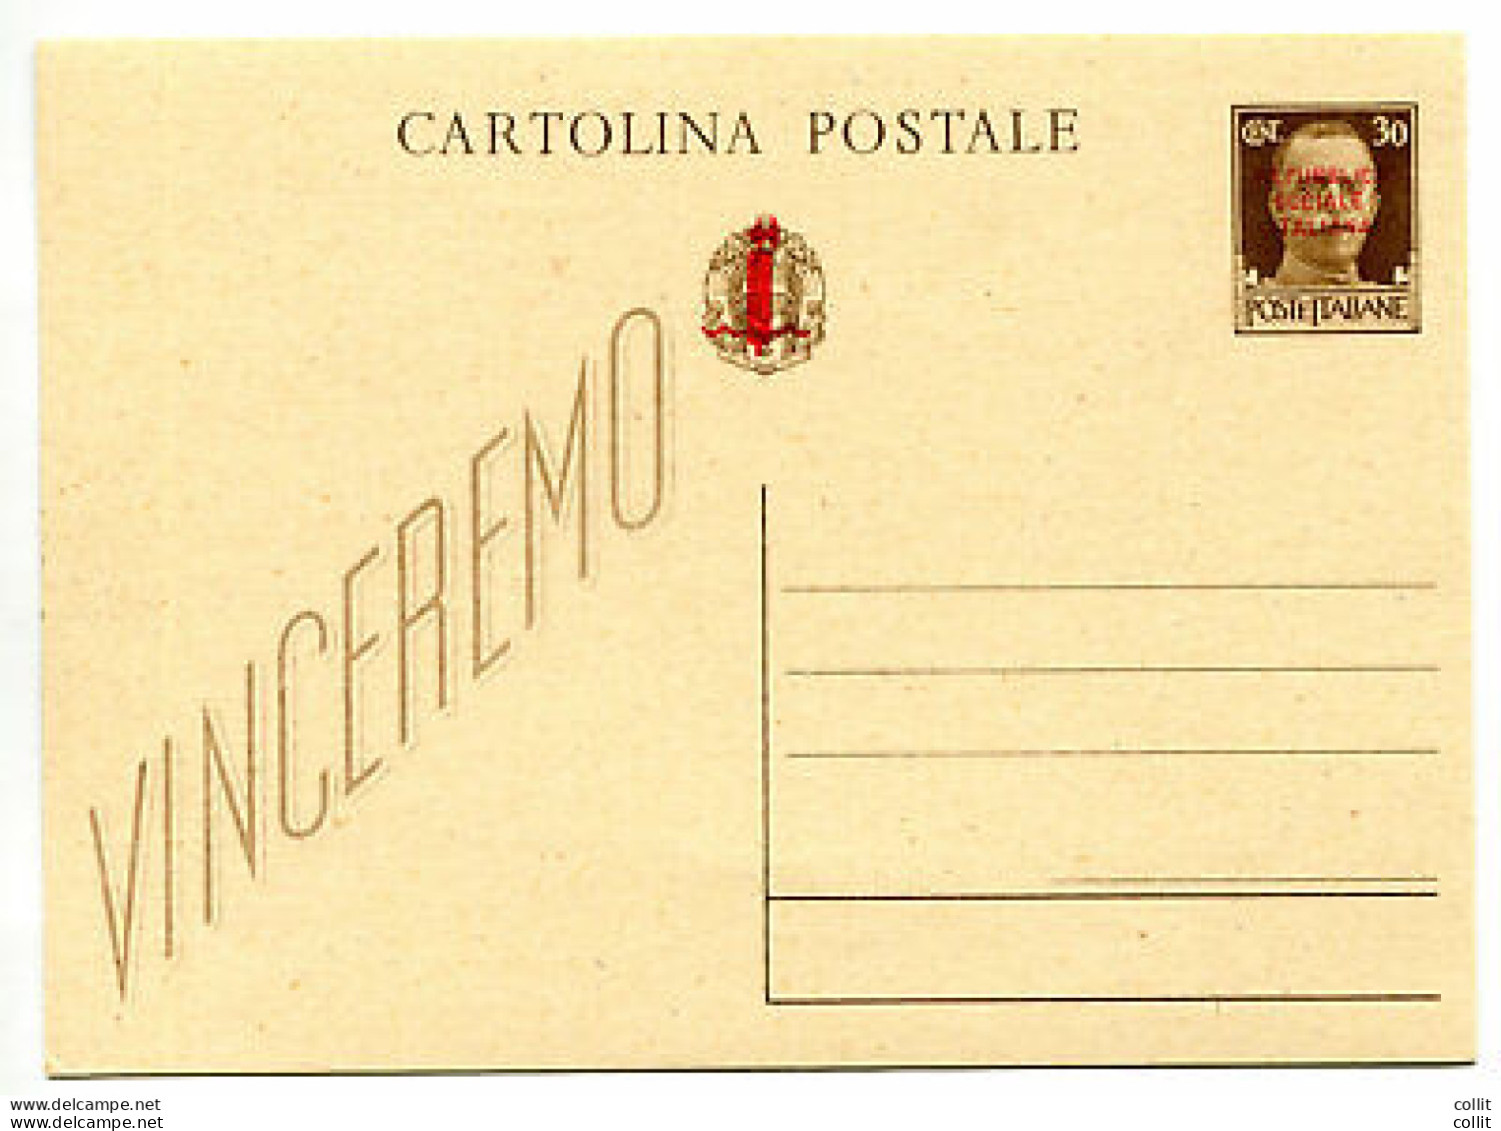 Cartolina Postale Repubblica Sociale Cent. 30 - Neufs